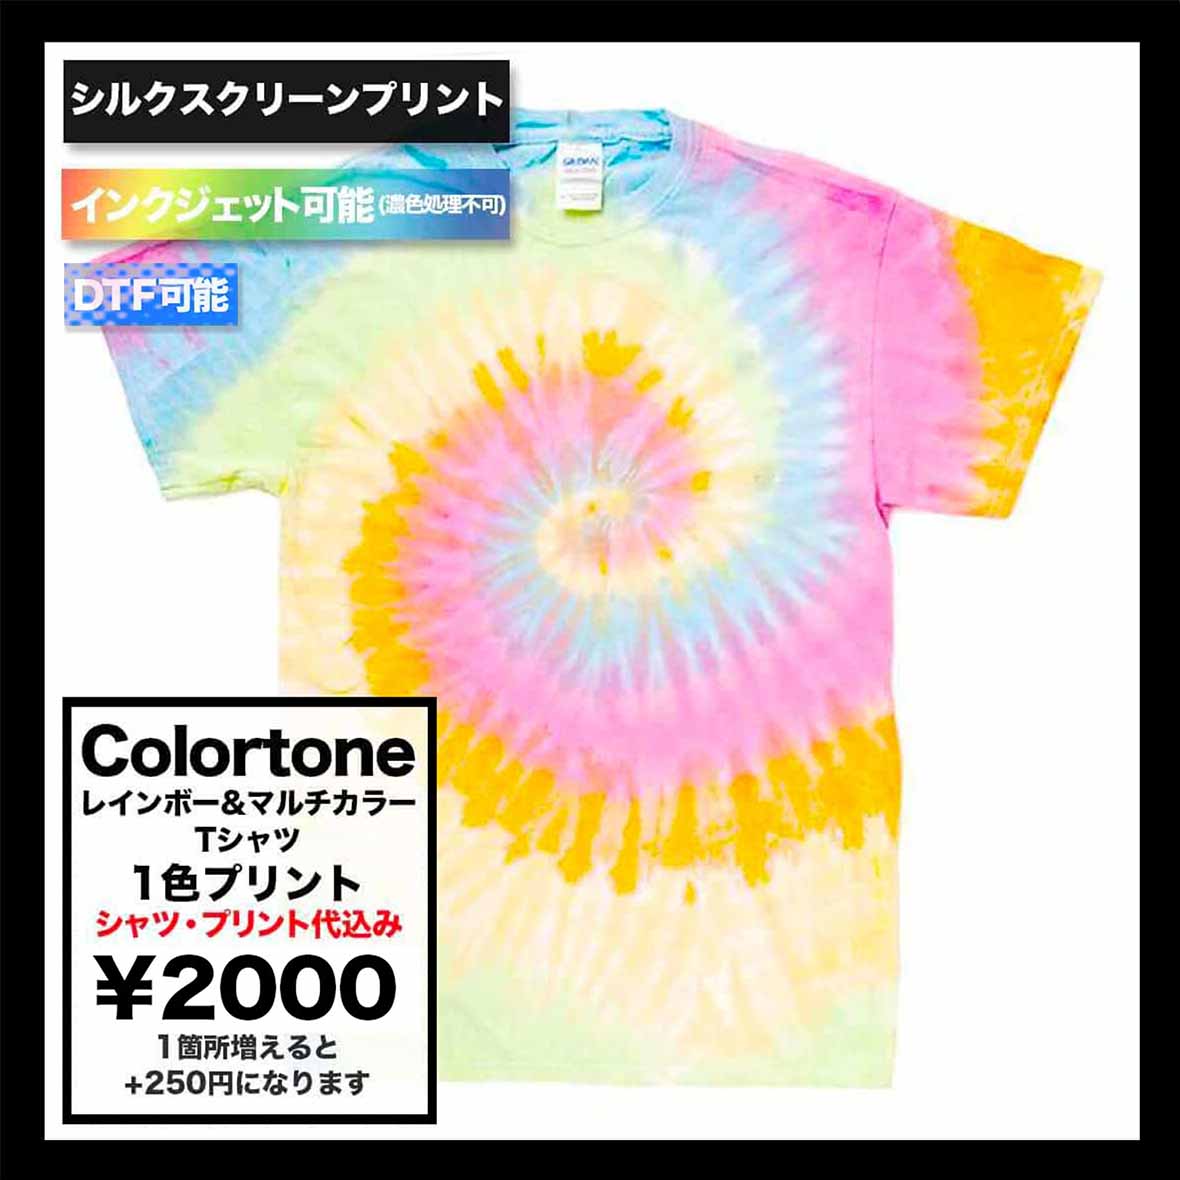 Colortone カラートーン 5.3 oz レインボー&マルチカラーTシャツ (品番TD1000_RM)